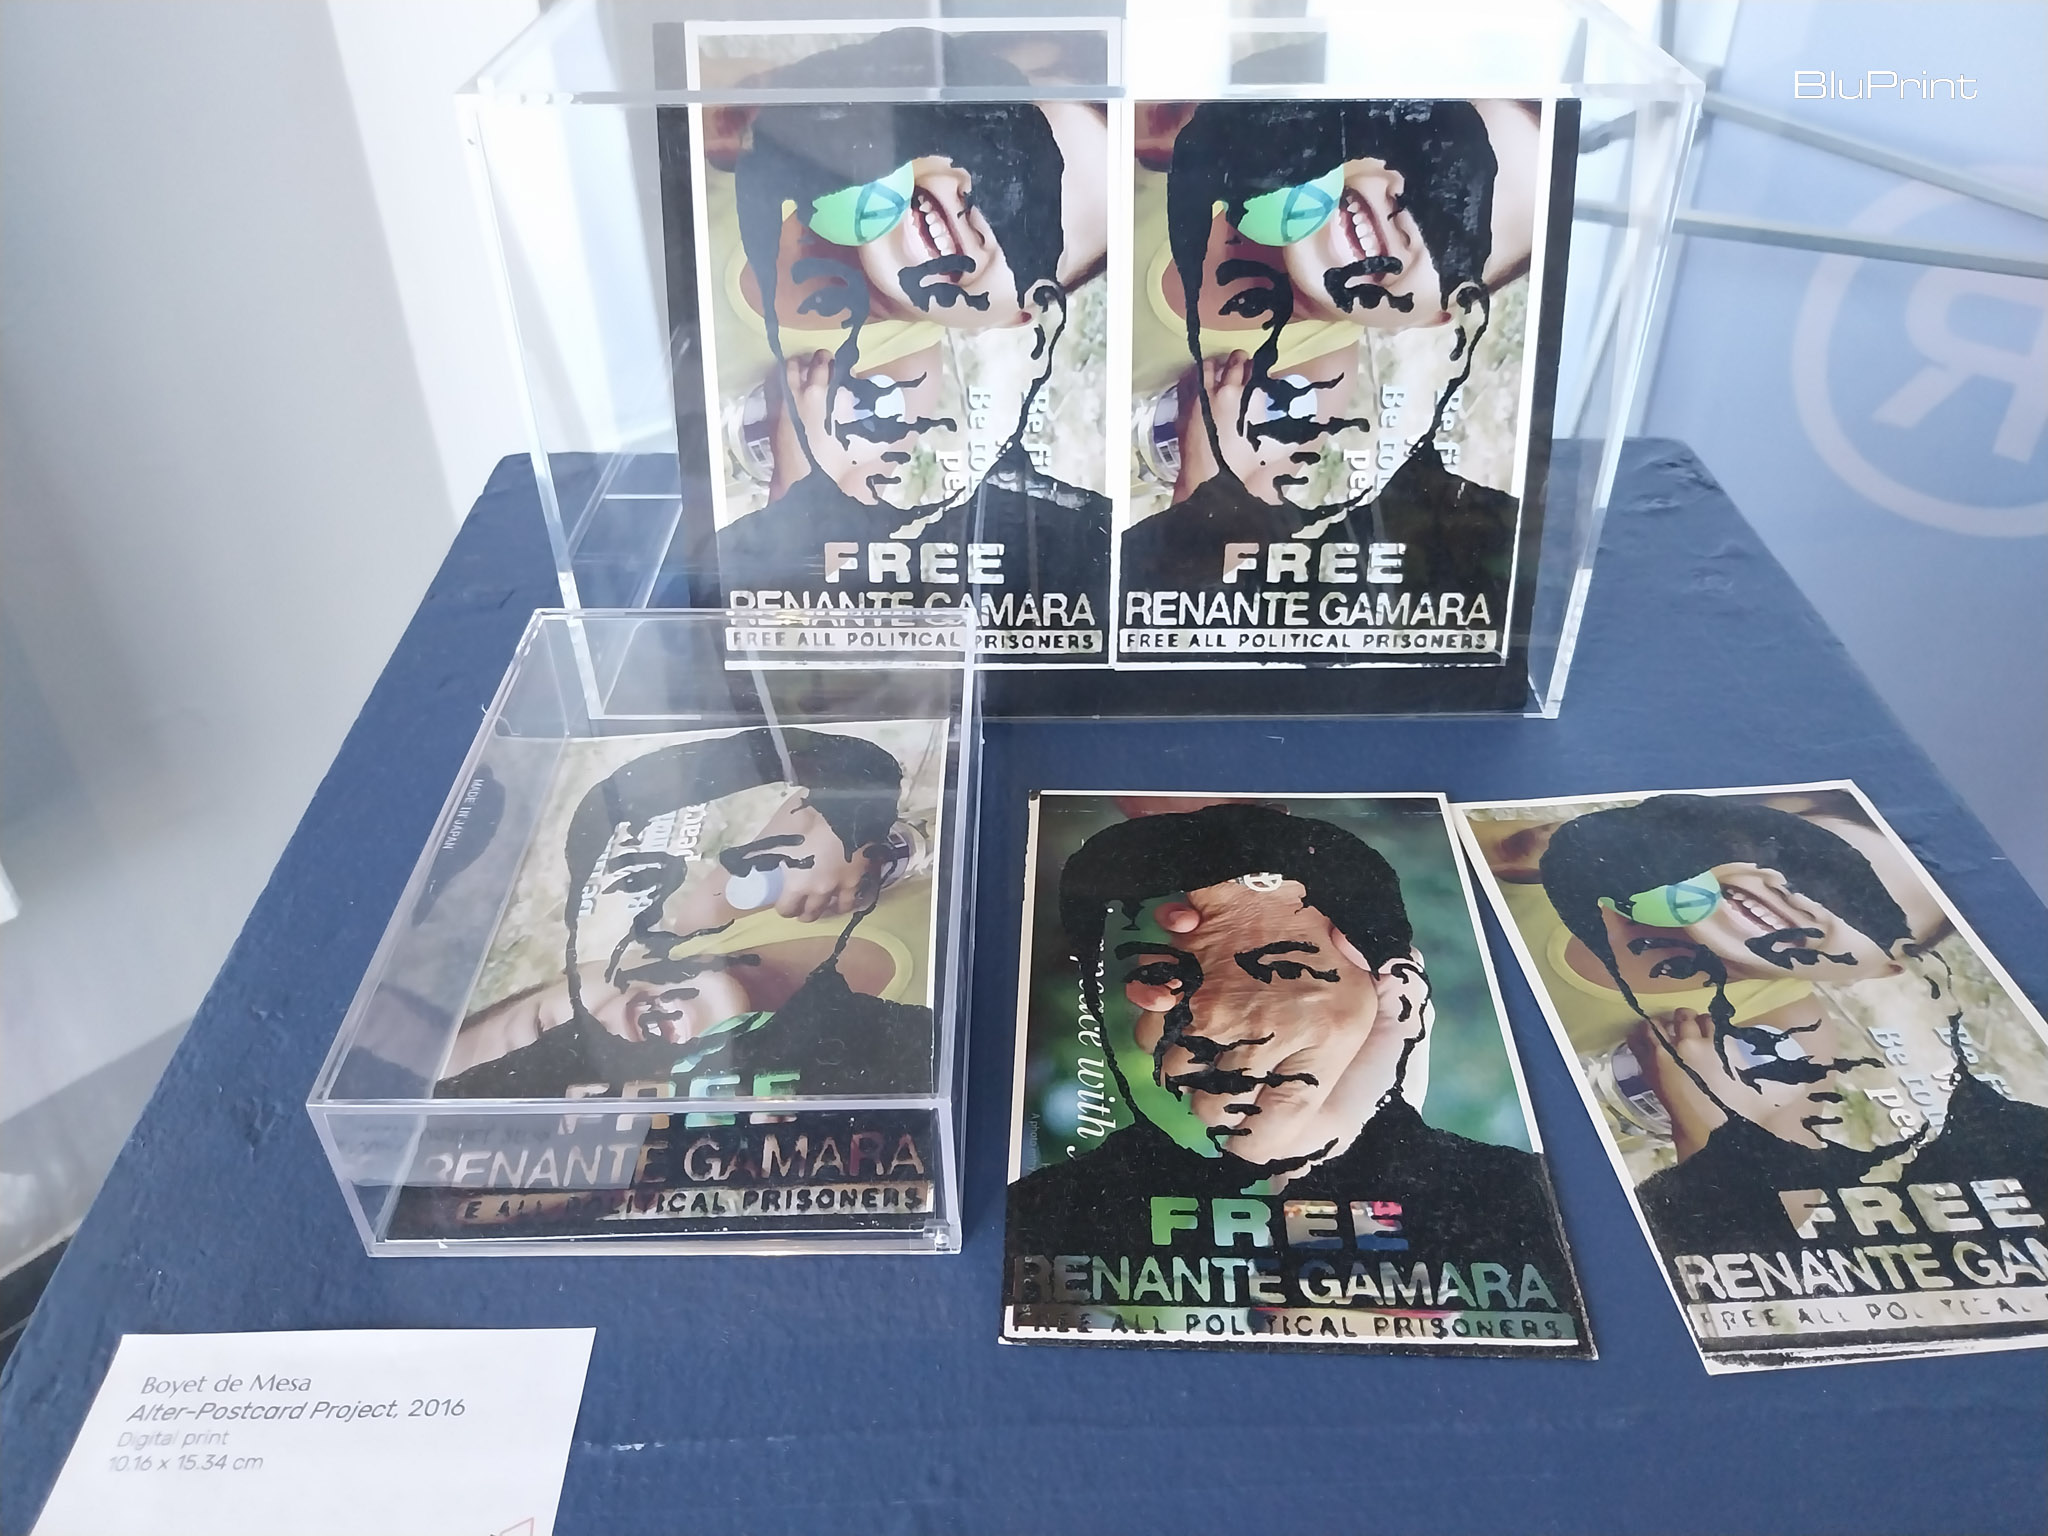 Boyet de Mesa's "Alter-Postcard Project" as shown in the "Warm Bodies" exhibit. Photo by Elle Yap.